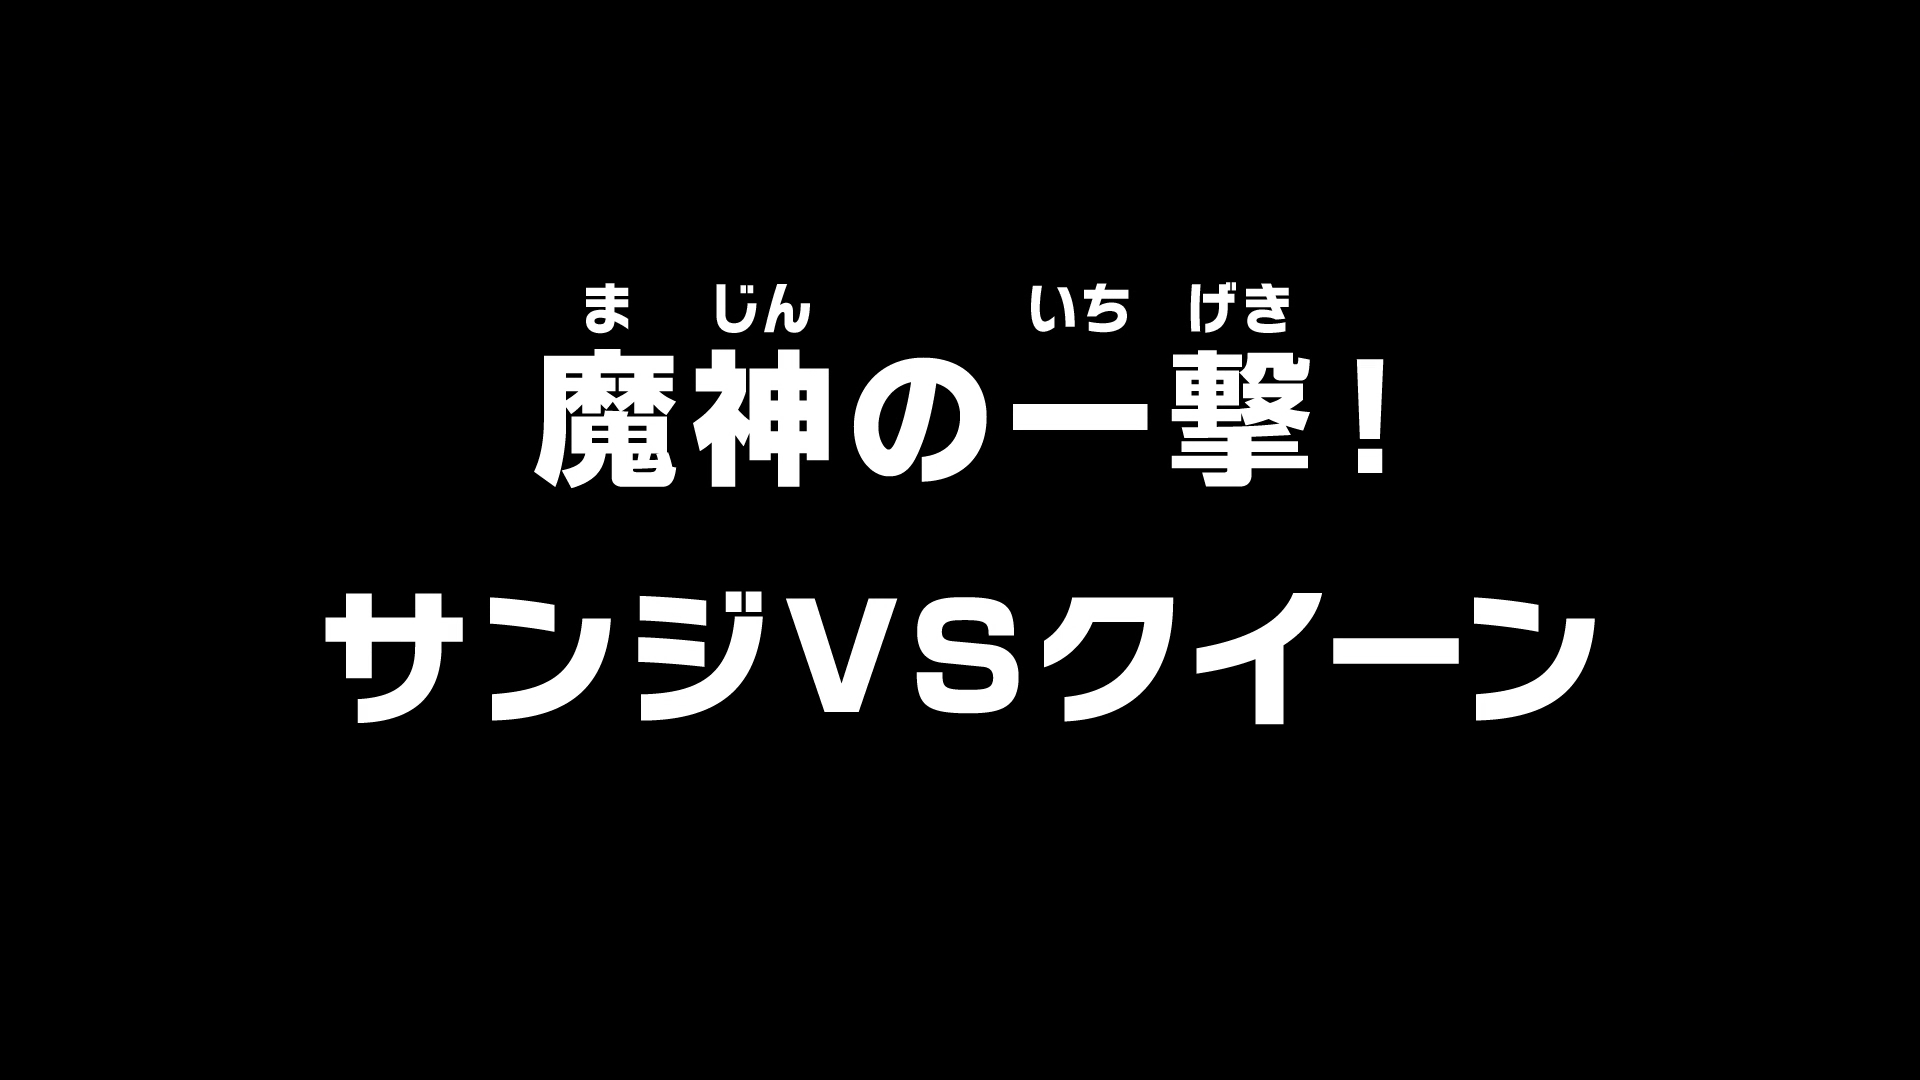 One Piece Episode 1061: Sanji Vs. Queen! Release Date & More